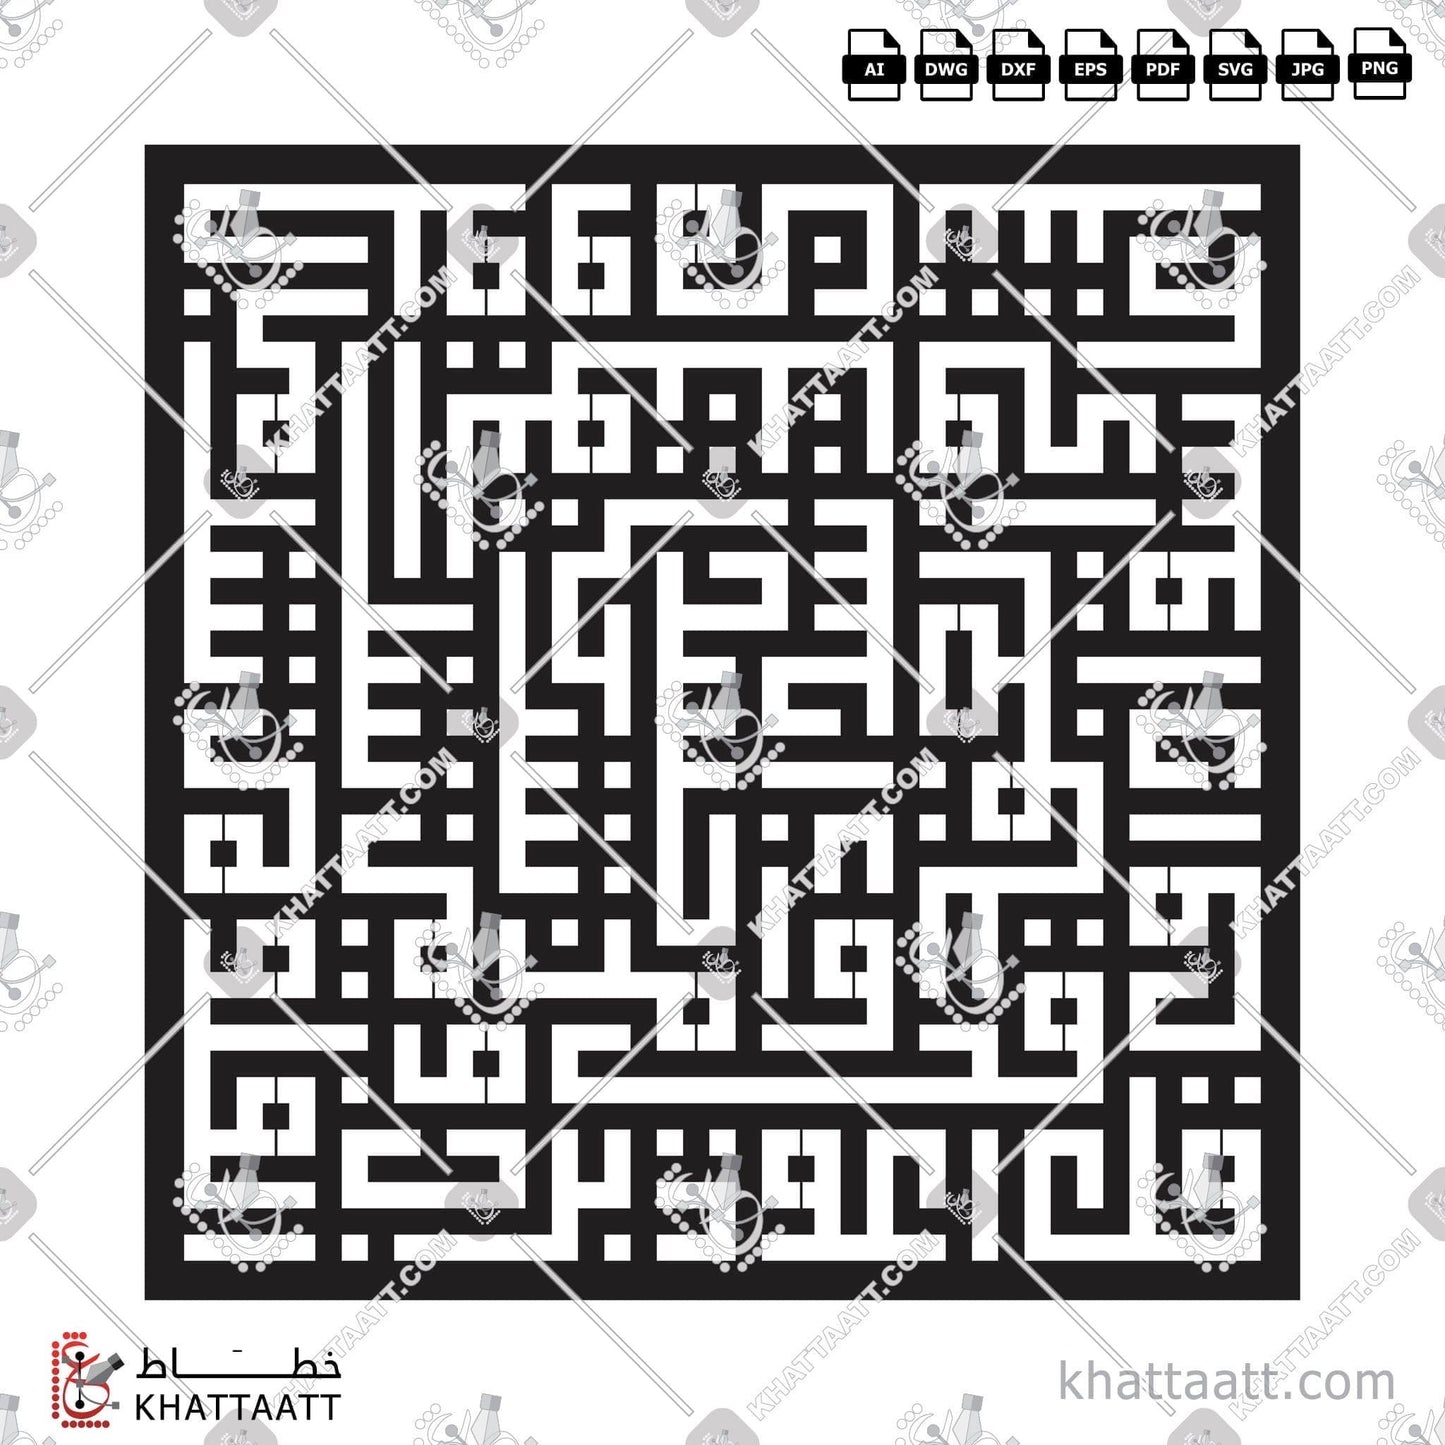 Download Arabic Calligraphy of Surat Al-Falaq - سورة الفلق in Kufi - الخط الكوفي in vector and .png